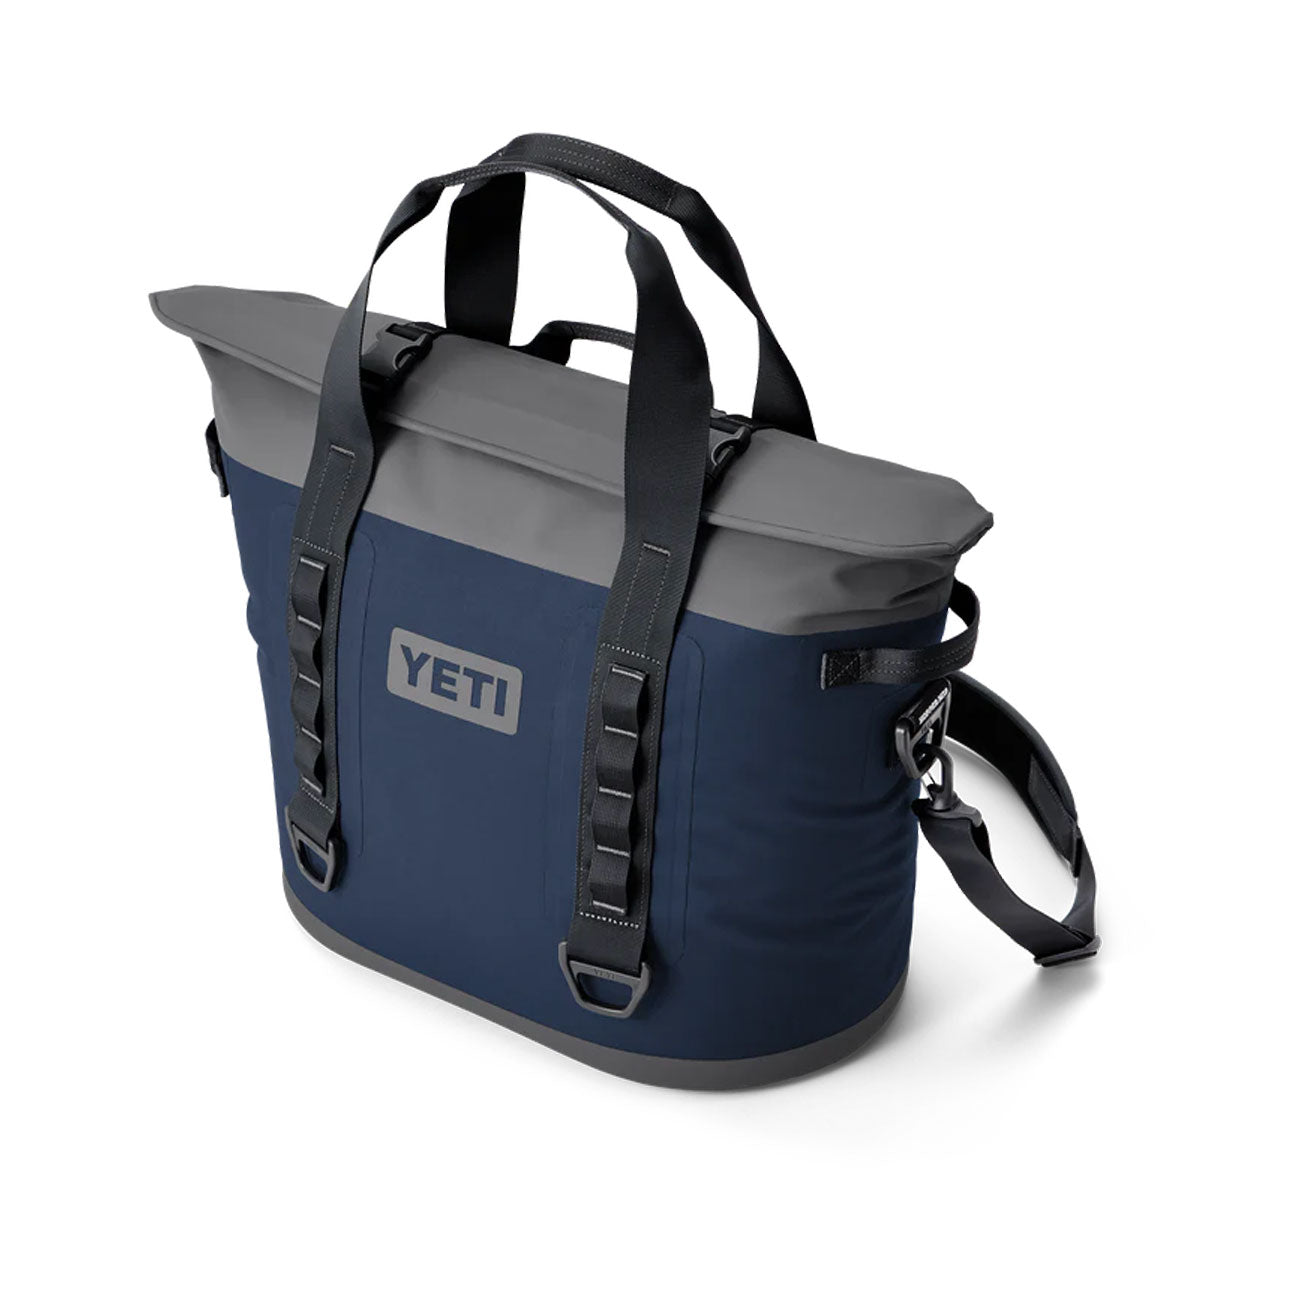 Yeti Hopper M30 Cool Bag 2.0 (Navy / Grau)  - Allike Store